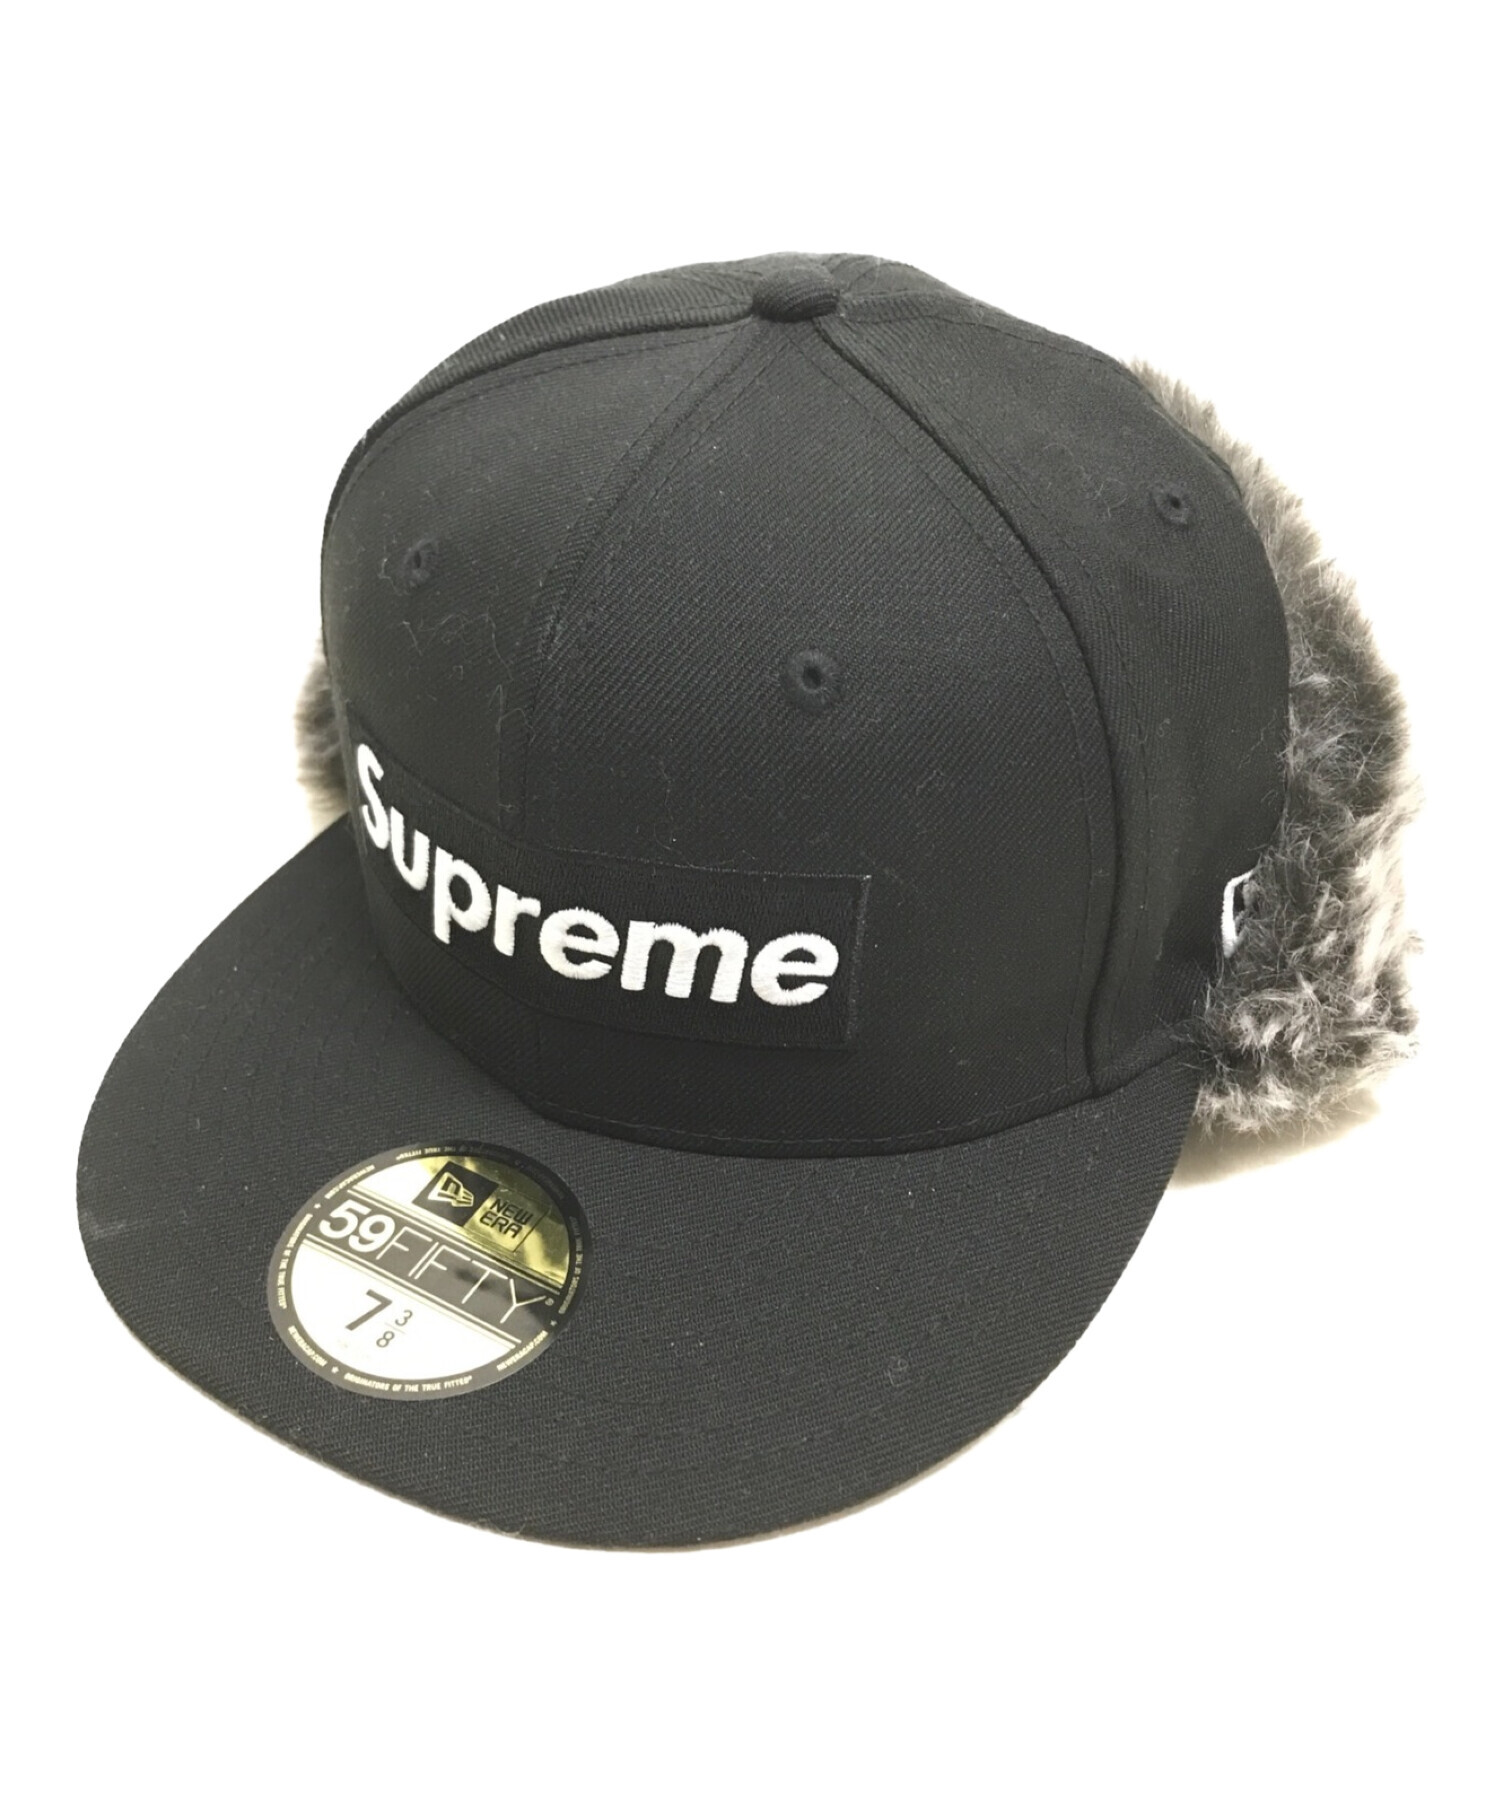 Supreme earflap cap new era 3/8 - キャップ